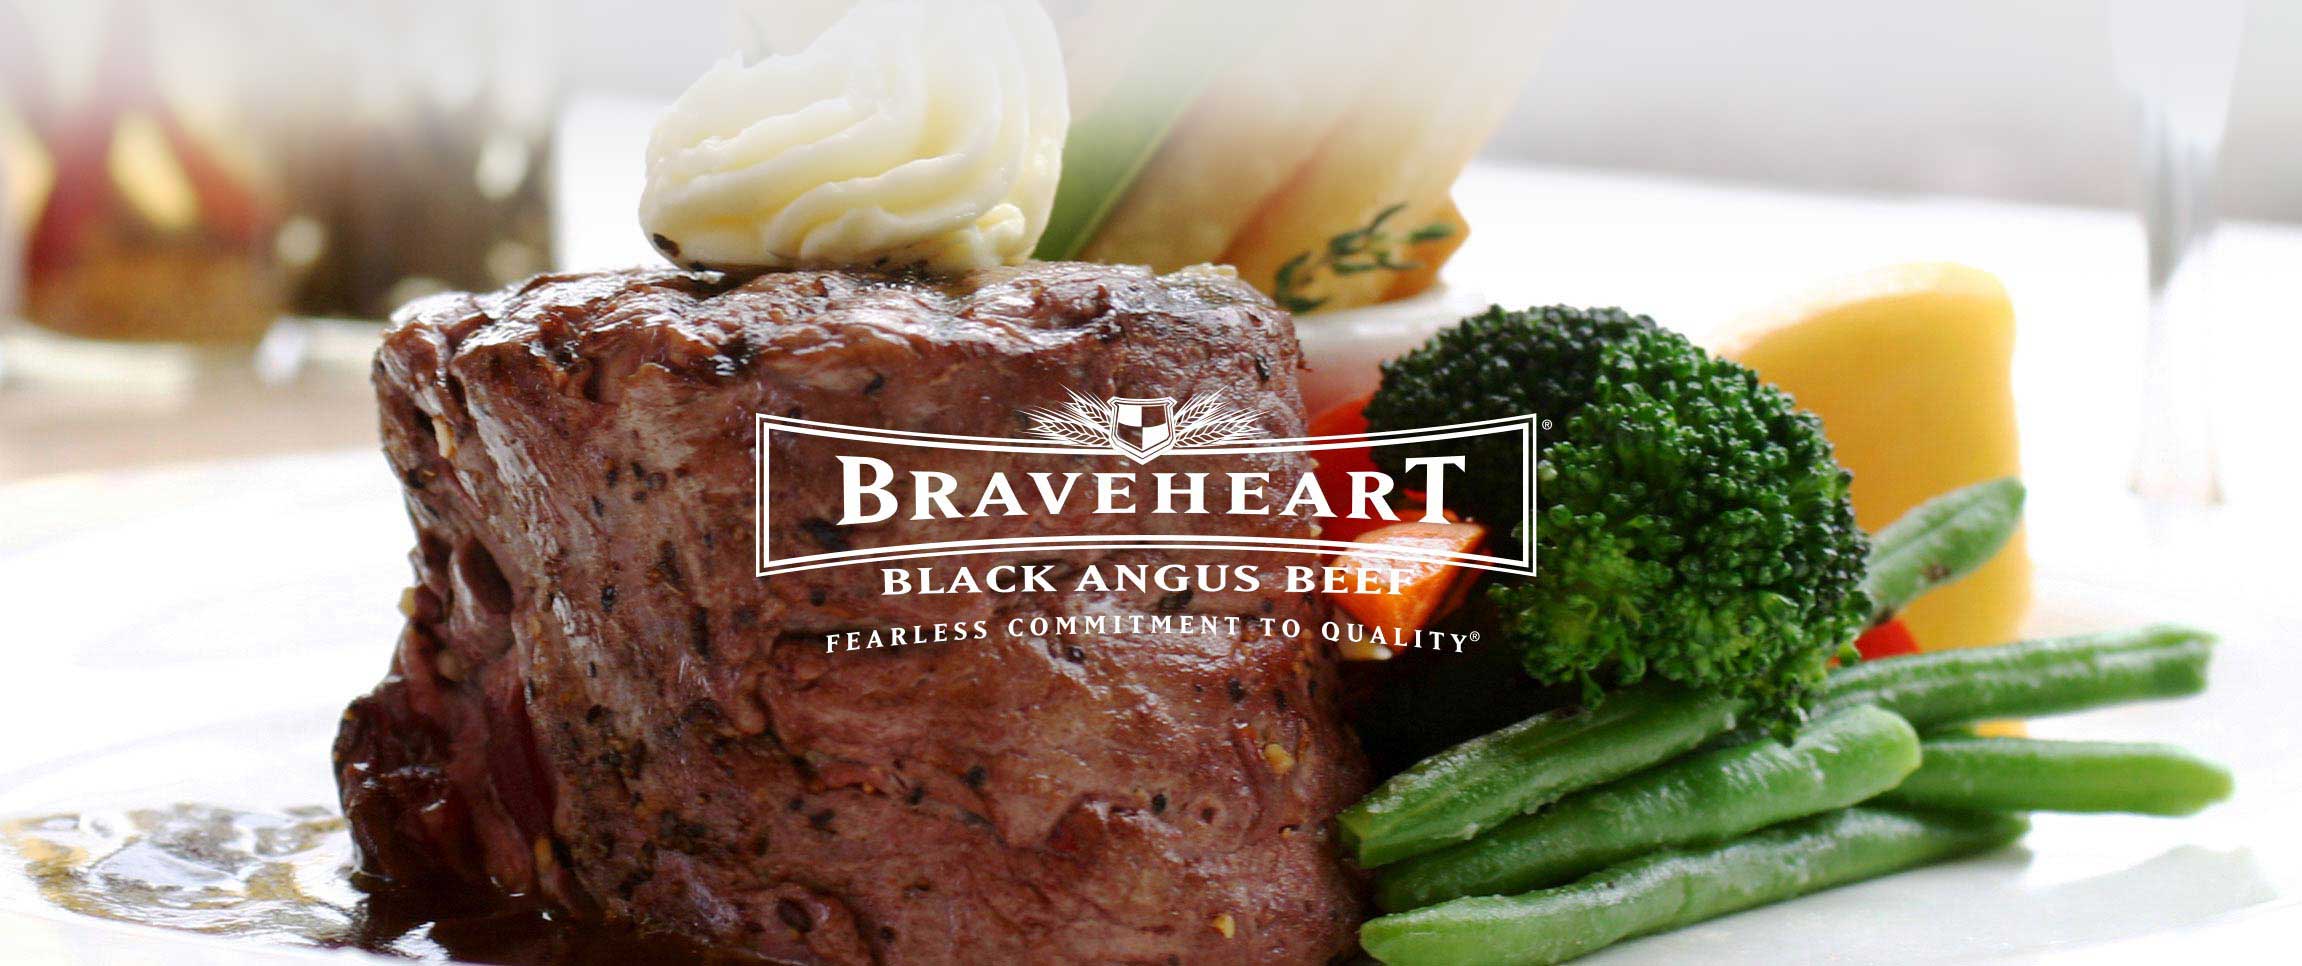 Braveheart Steak with Vegetables